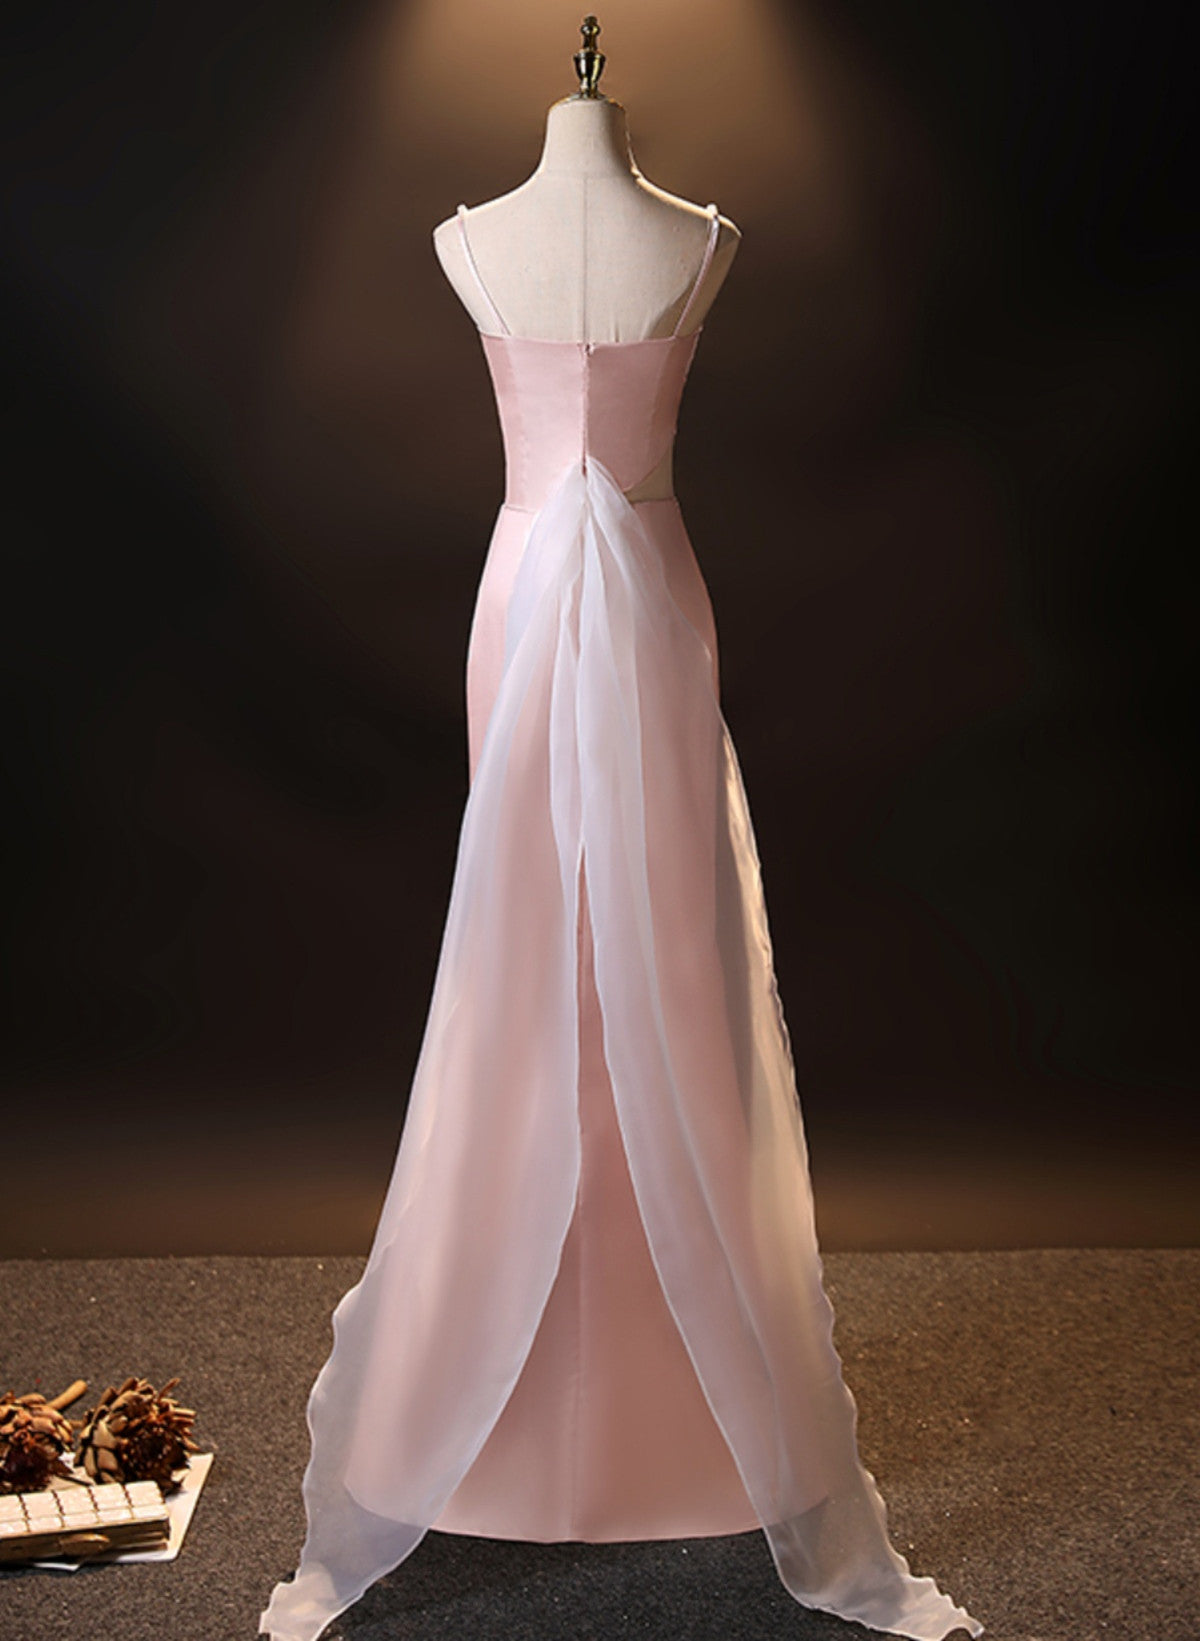 Pink Simple Mermaid Straps Long Evening Dress, Pink Formal Dress Prom Dress